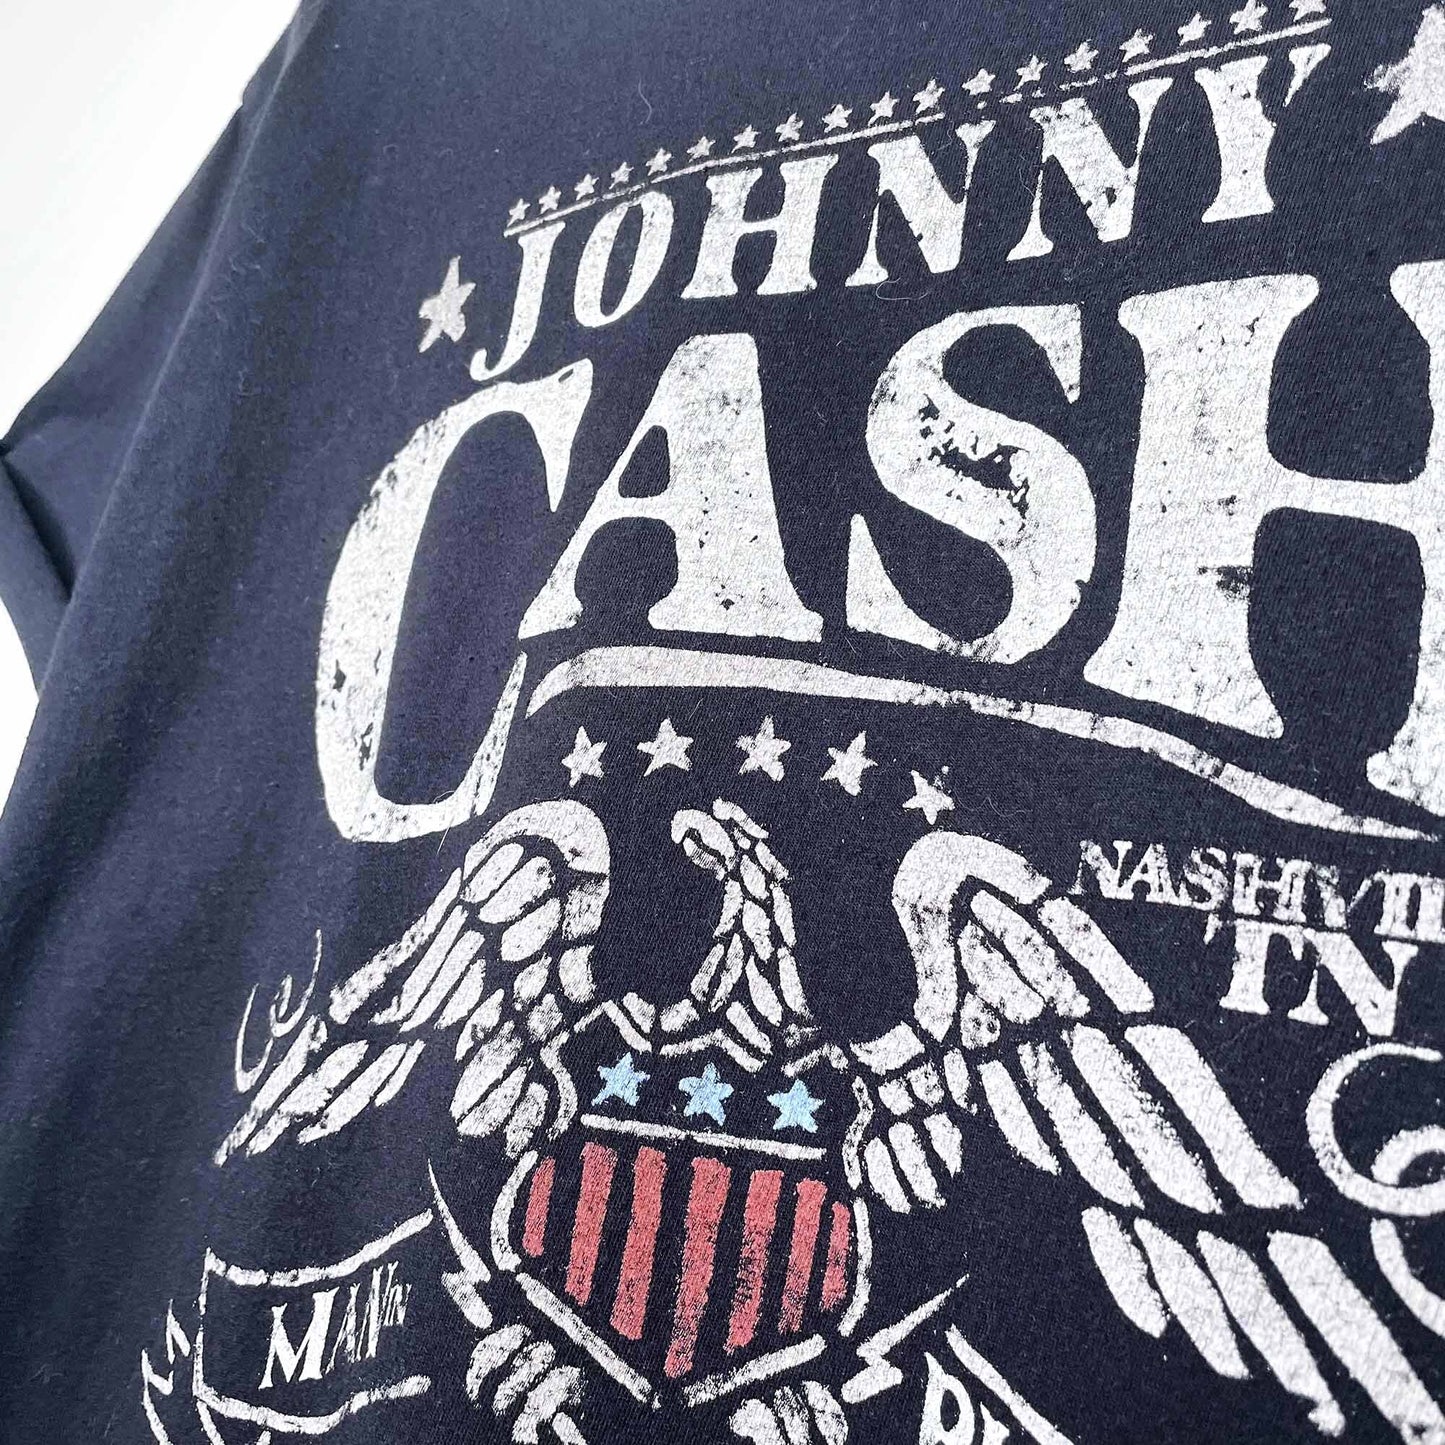 Johnny Cash band tee - size Large